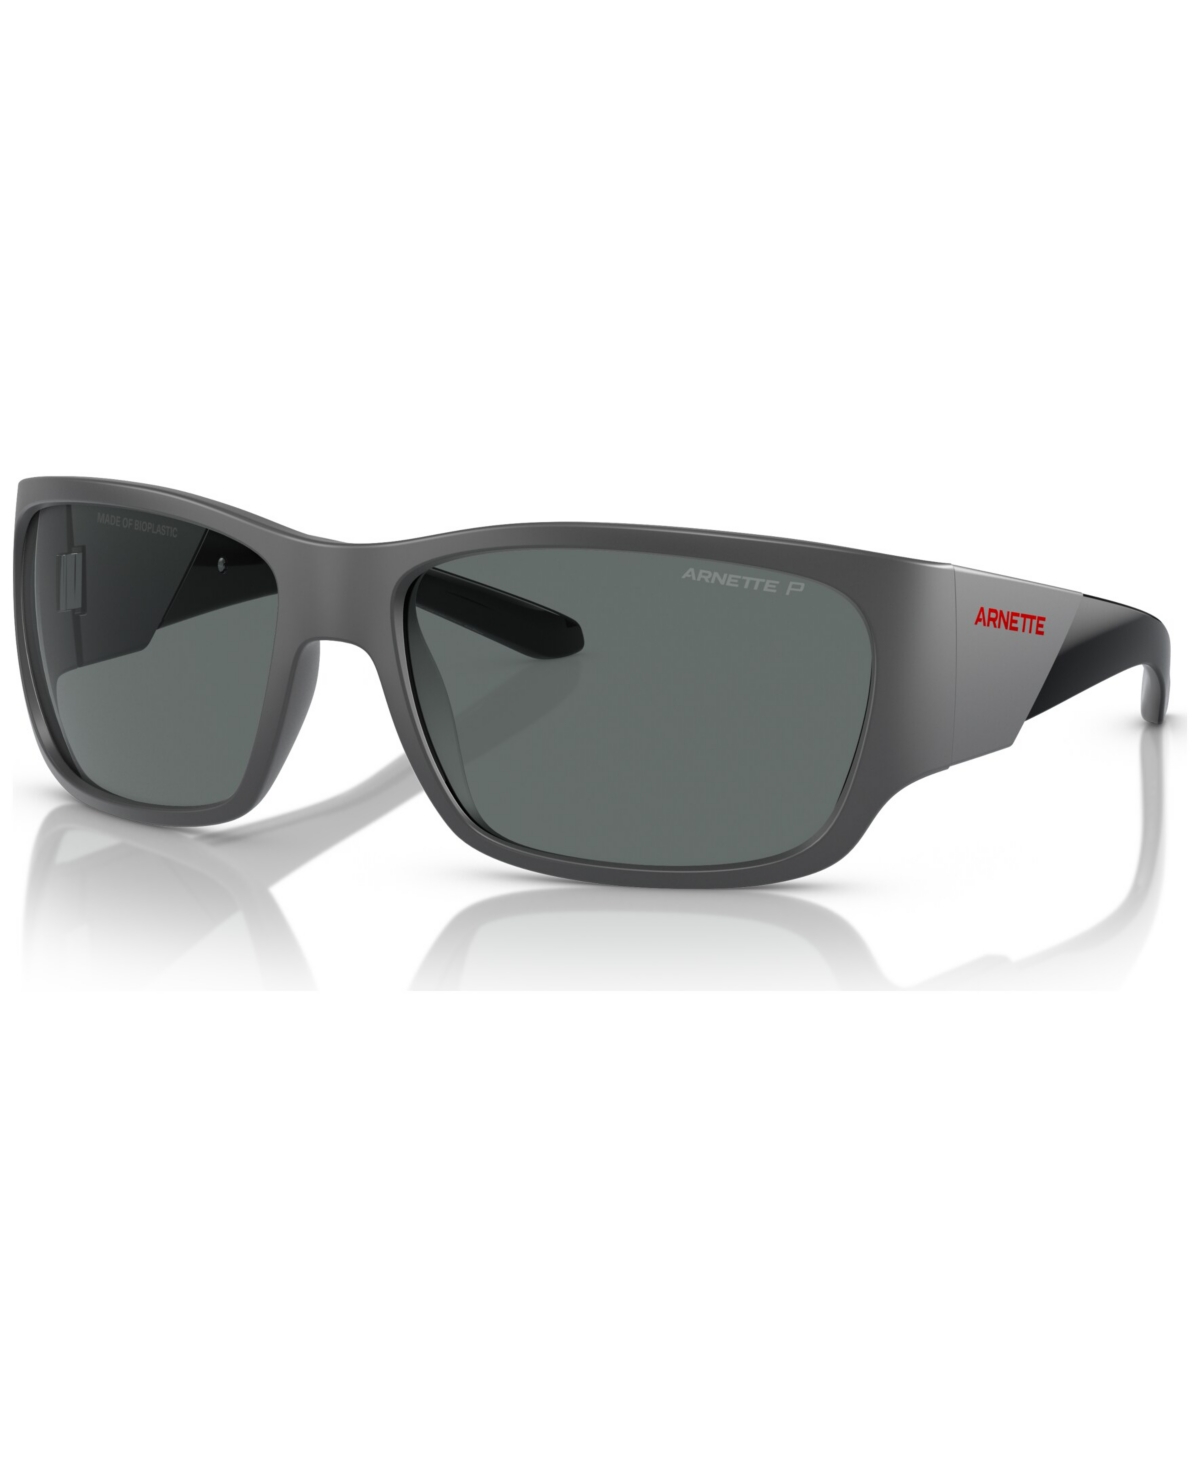 Arnette Men's Polarized Sunglasses, Lil' Snap In Polarized Grey